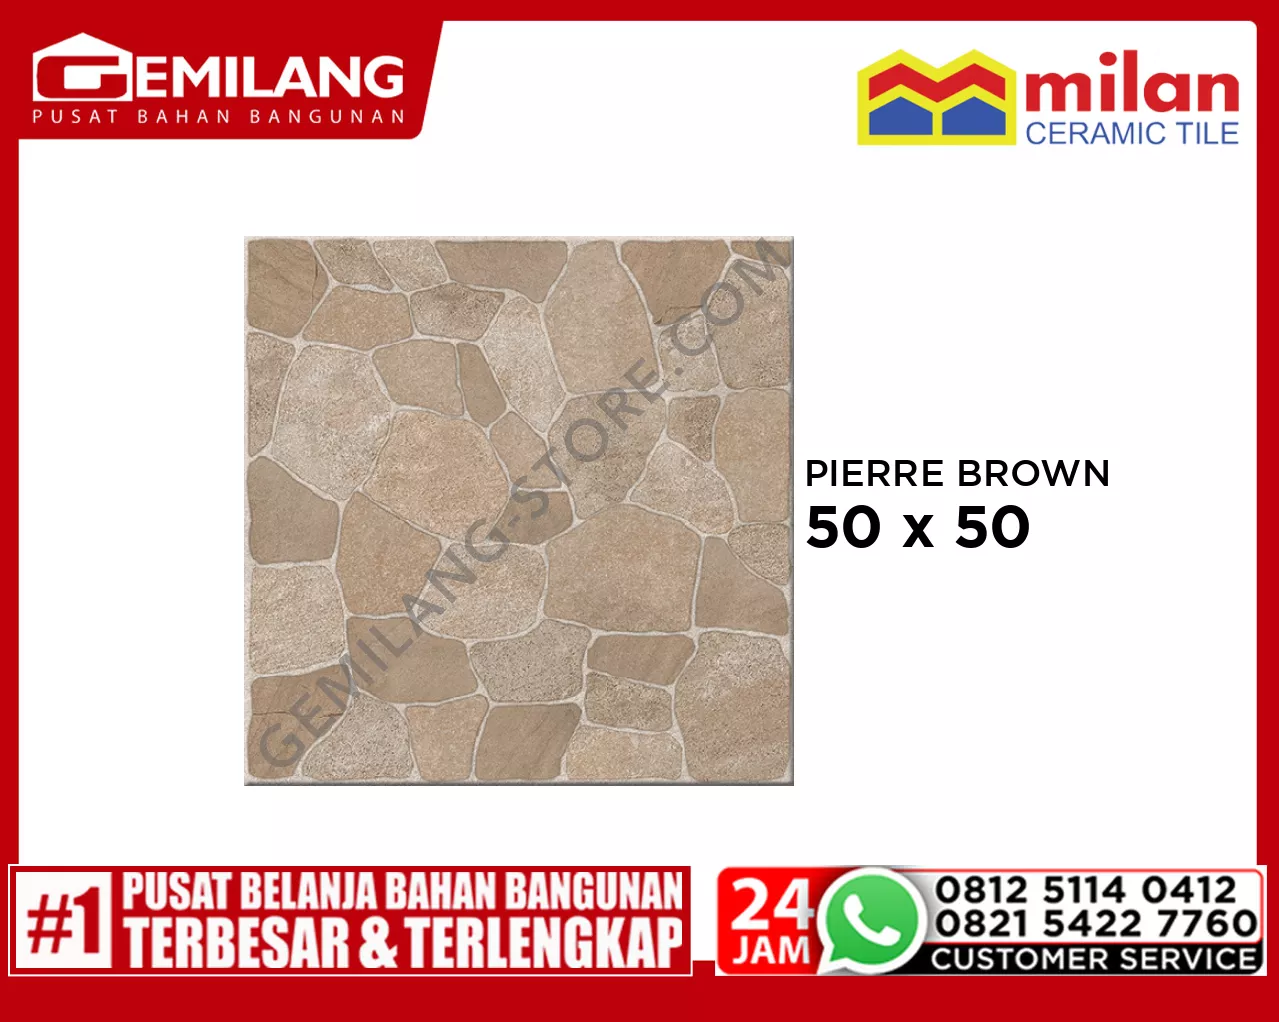 MILAN PIERRE BROWN 50 x 50